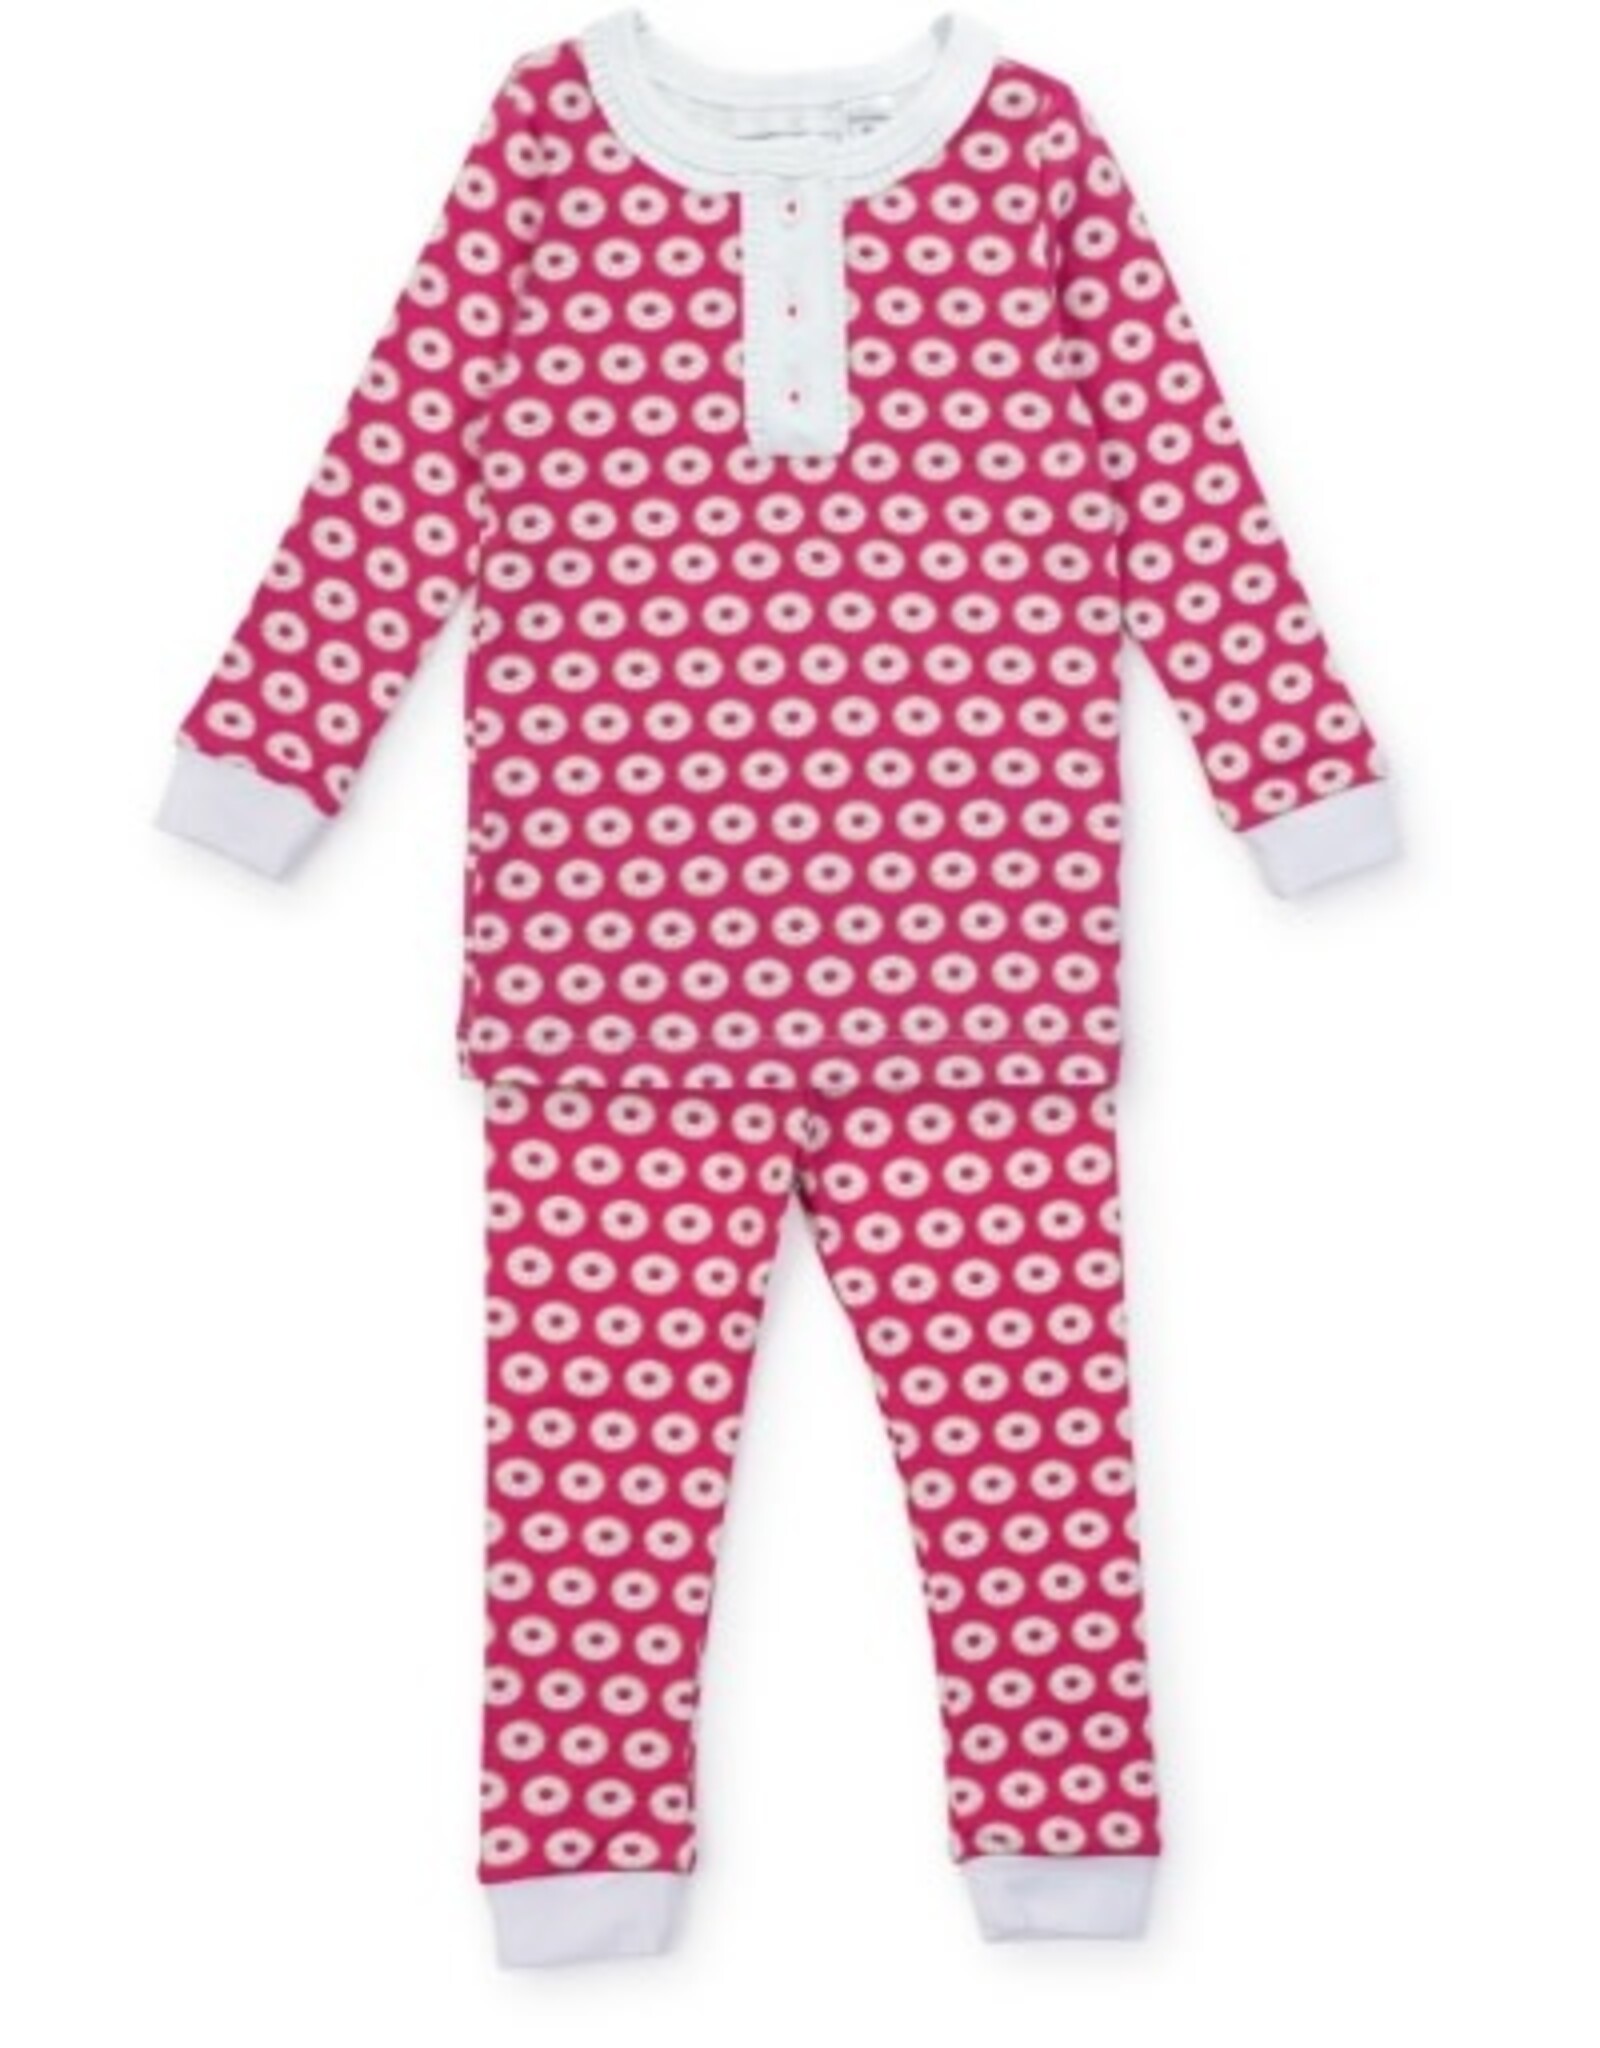 Lila + Hayes Alden Pajama Set, Pink Donuts